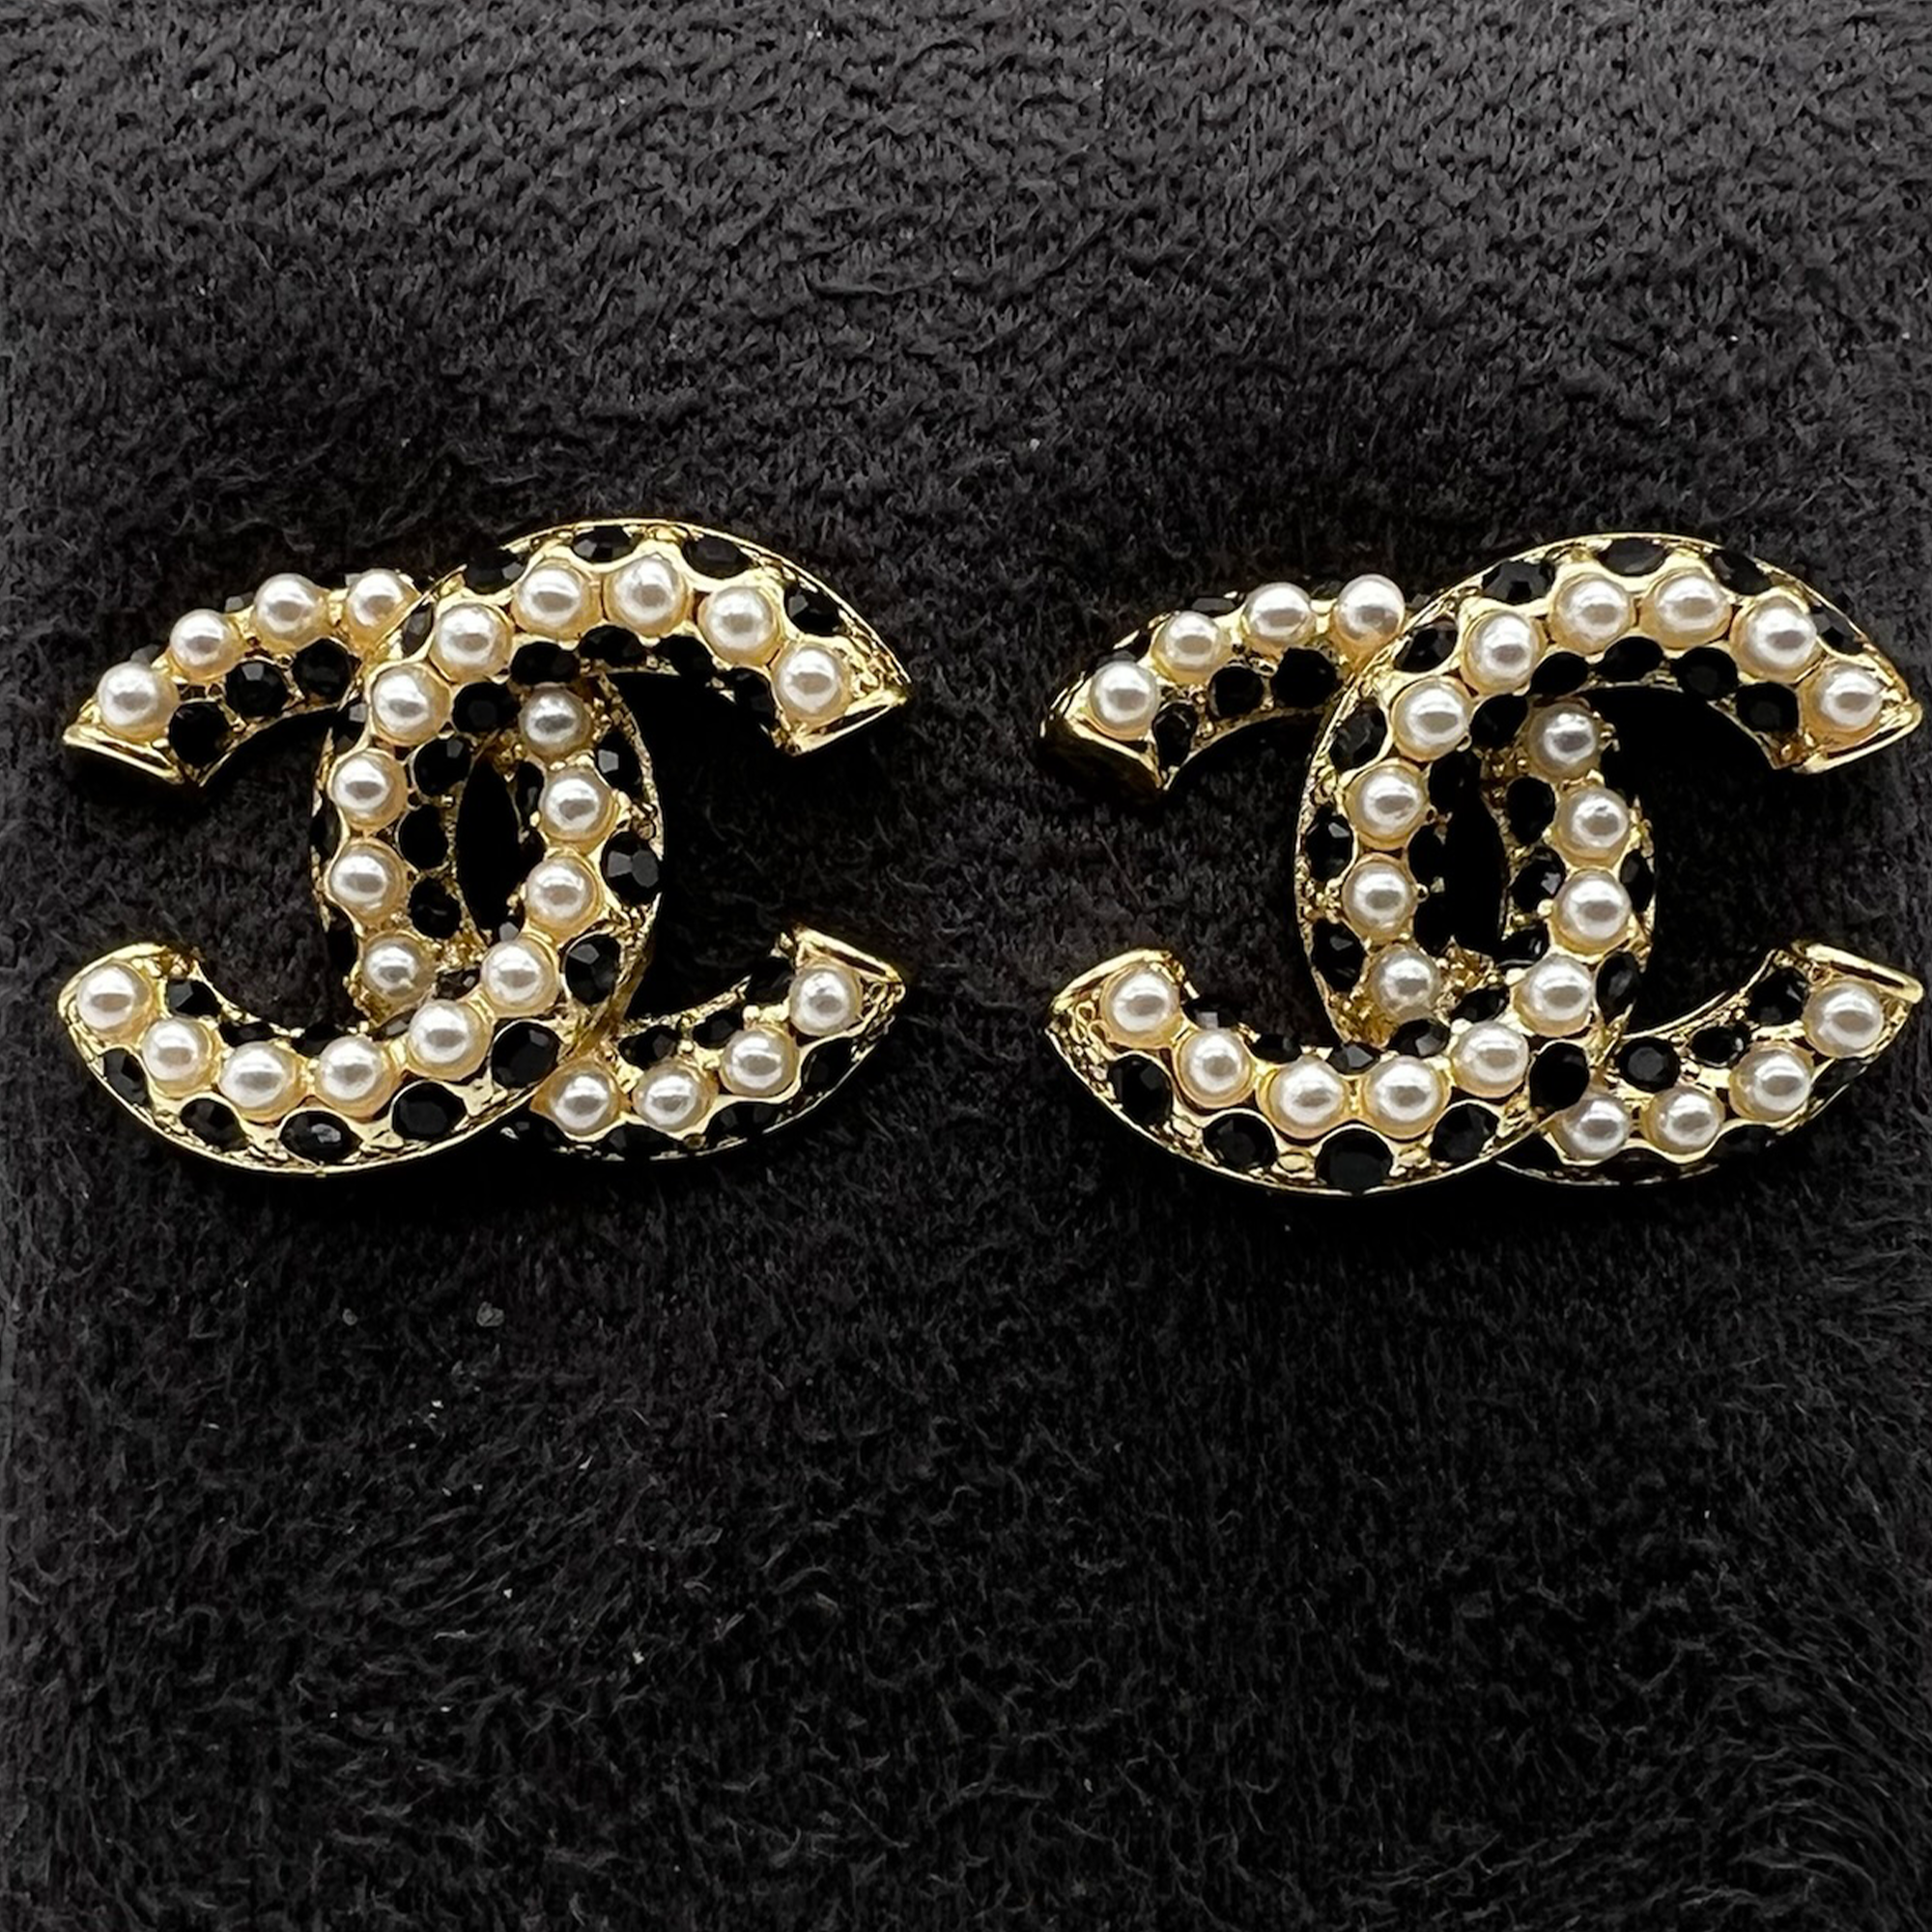 Cc pearl earrings Chanel Gold in Pearl  31452121